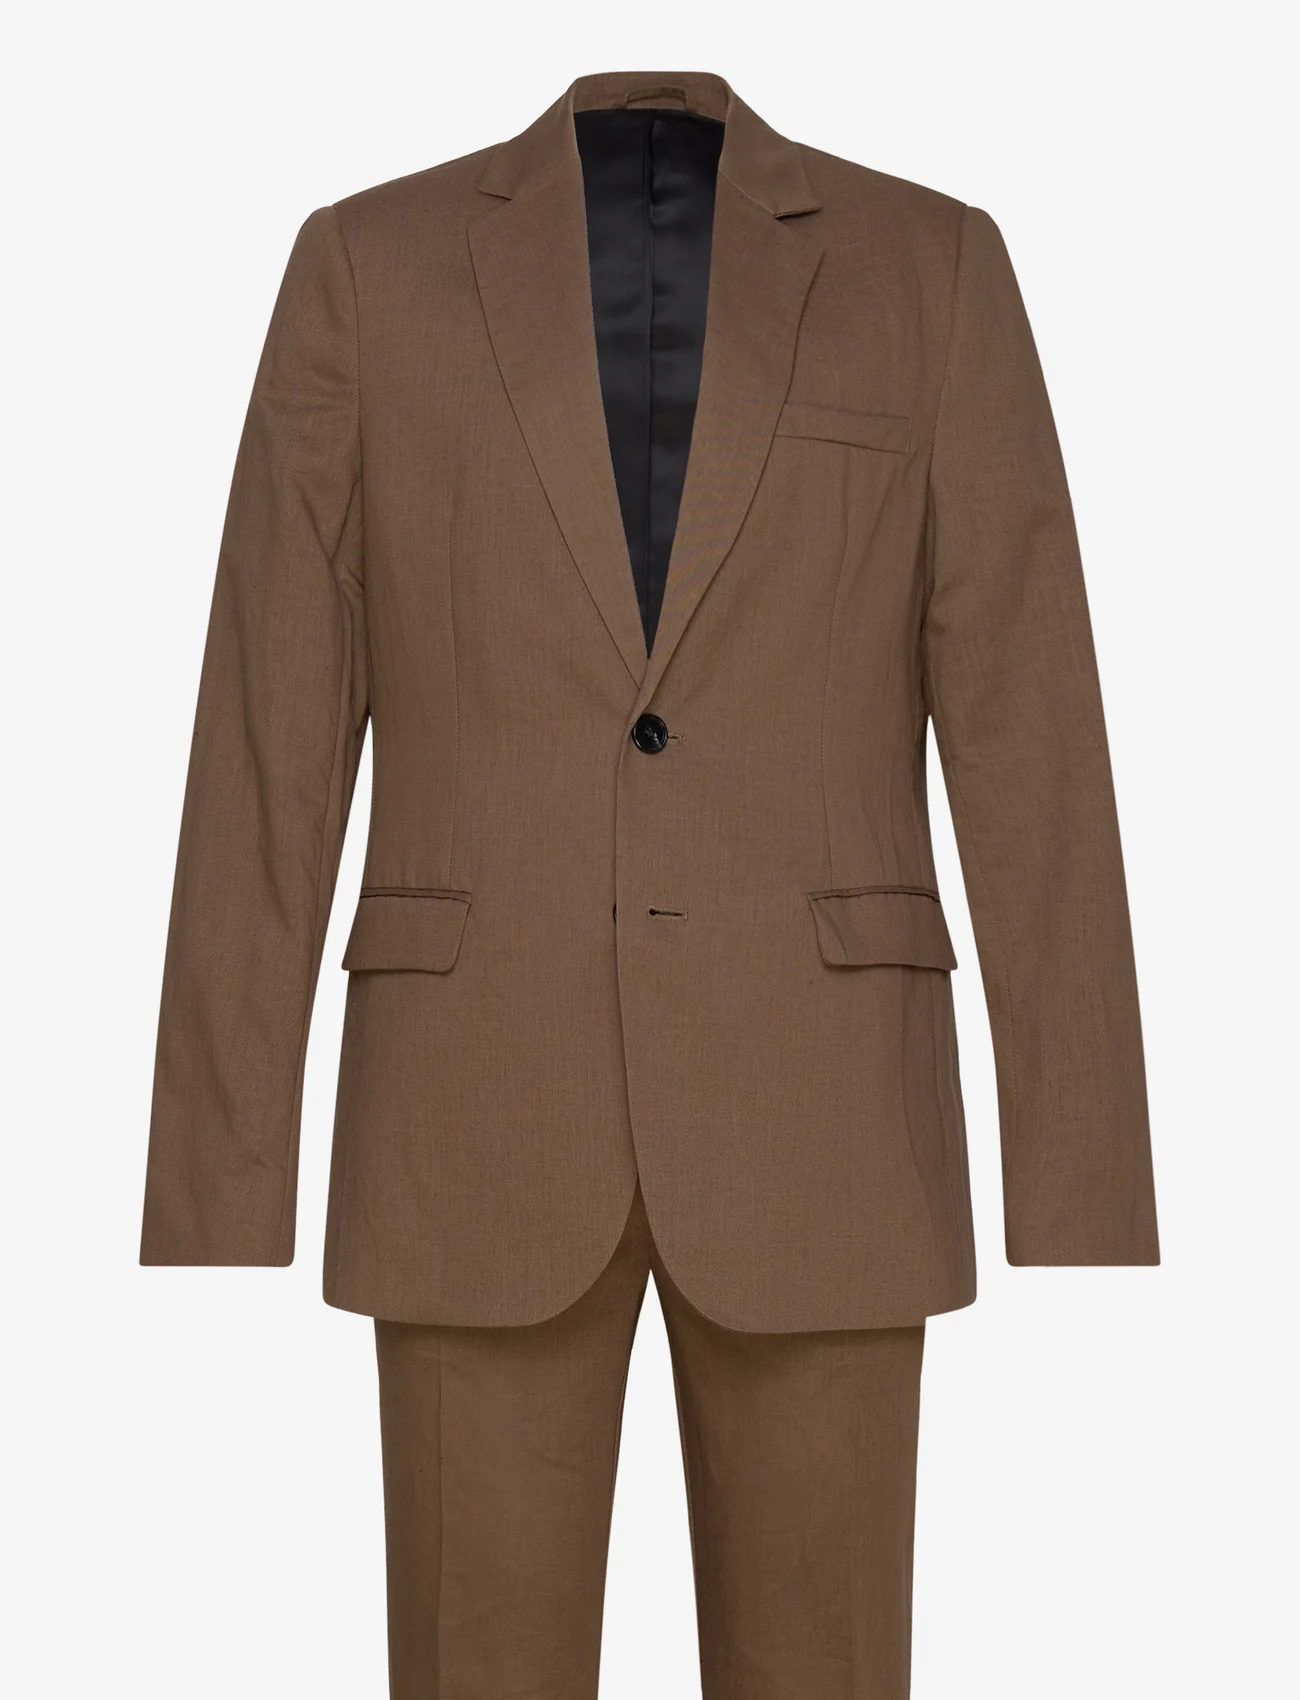 Bruuns Bazaar - LinoBBCarlAxel suit - Žaketes ar divrindu pogājumu - toffee - 0